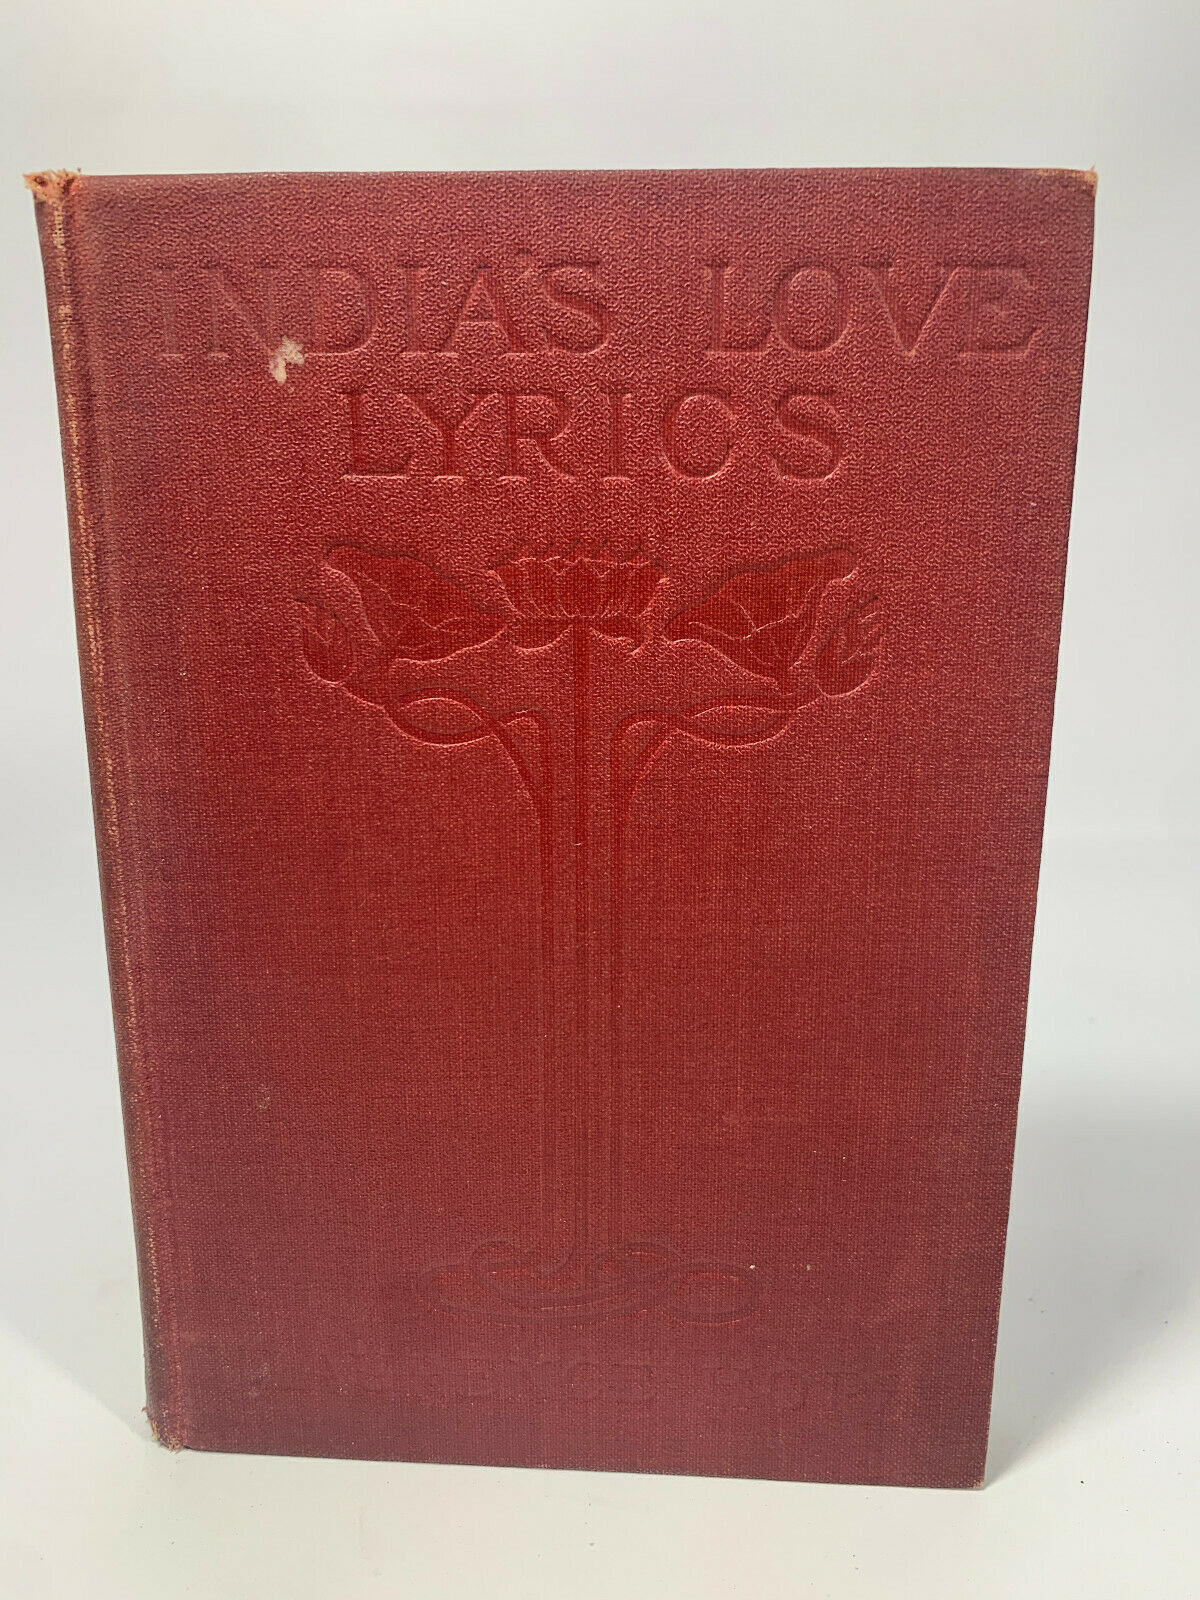 India's Love Lyrics by Laurence Hope 1925